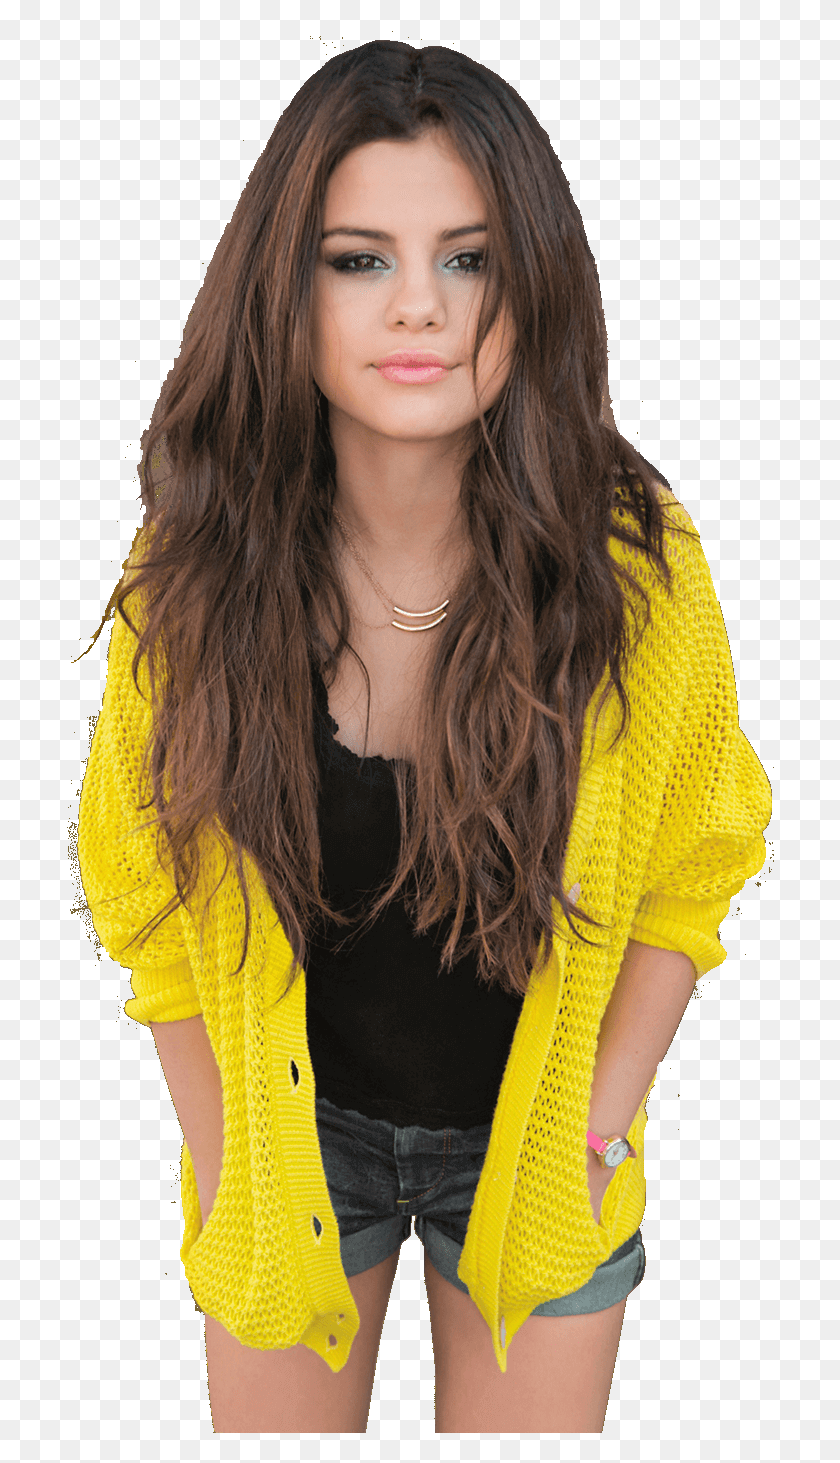 708x1403 Selena Gomez Yellow Top Selena Gomez Wizards Of Waverly Place, Ropa, Vestimenta, Persona Hd Png